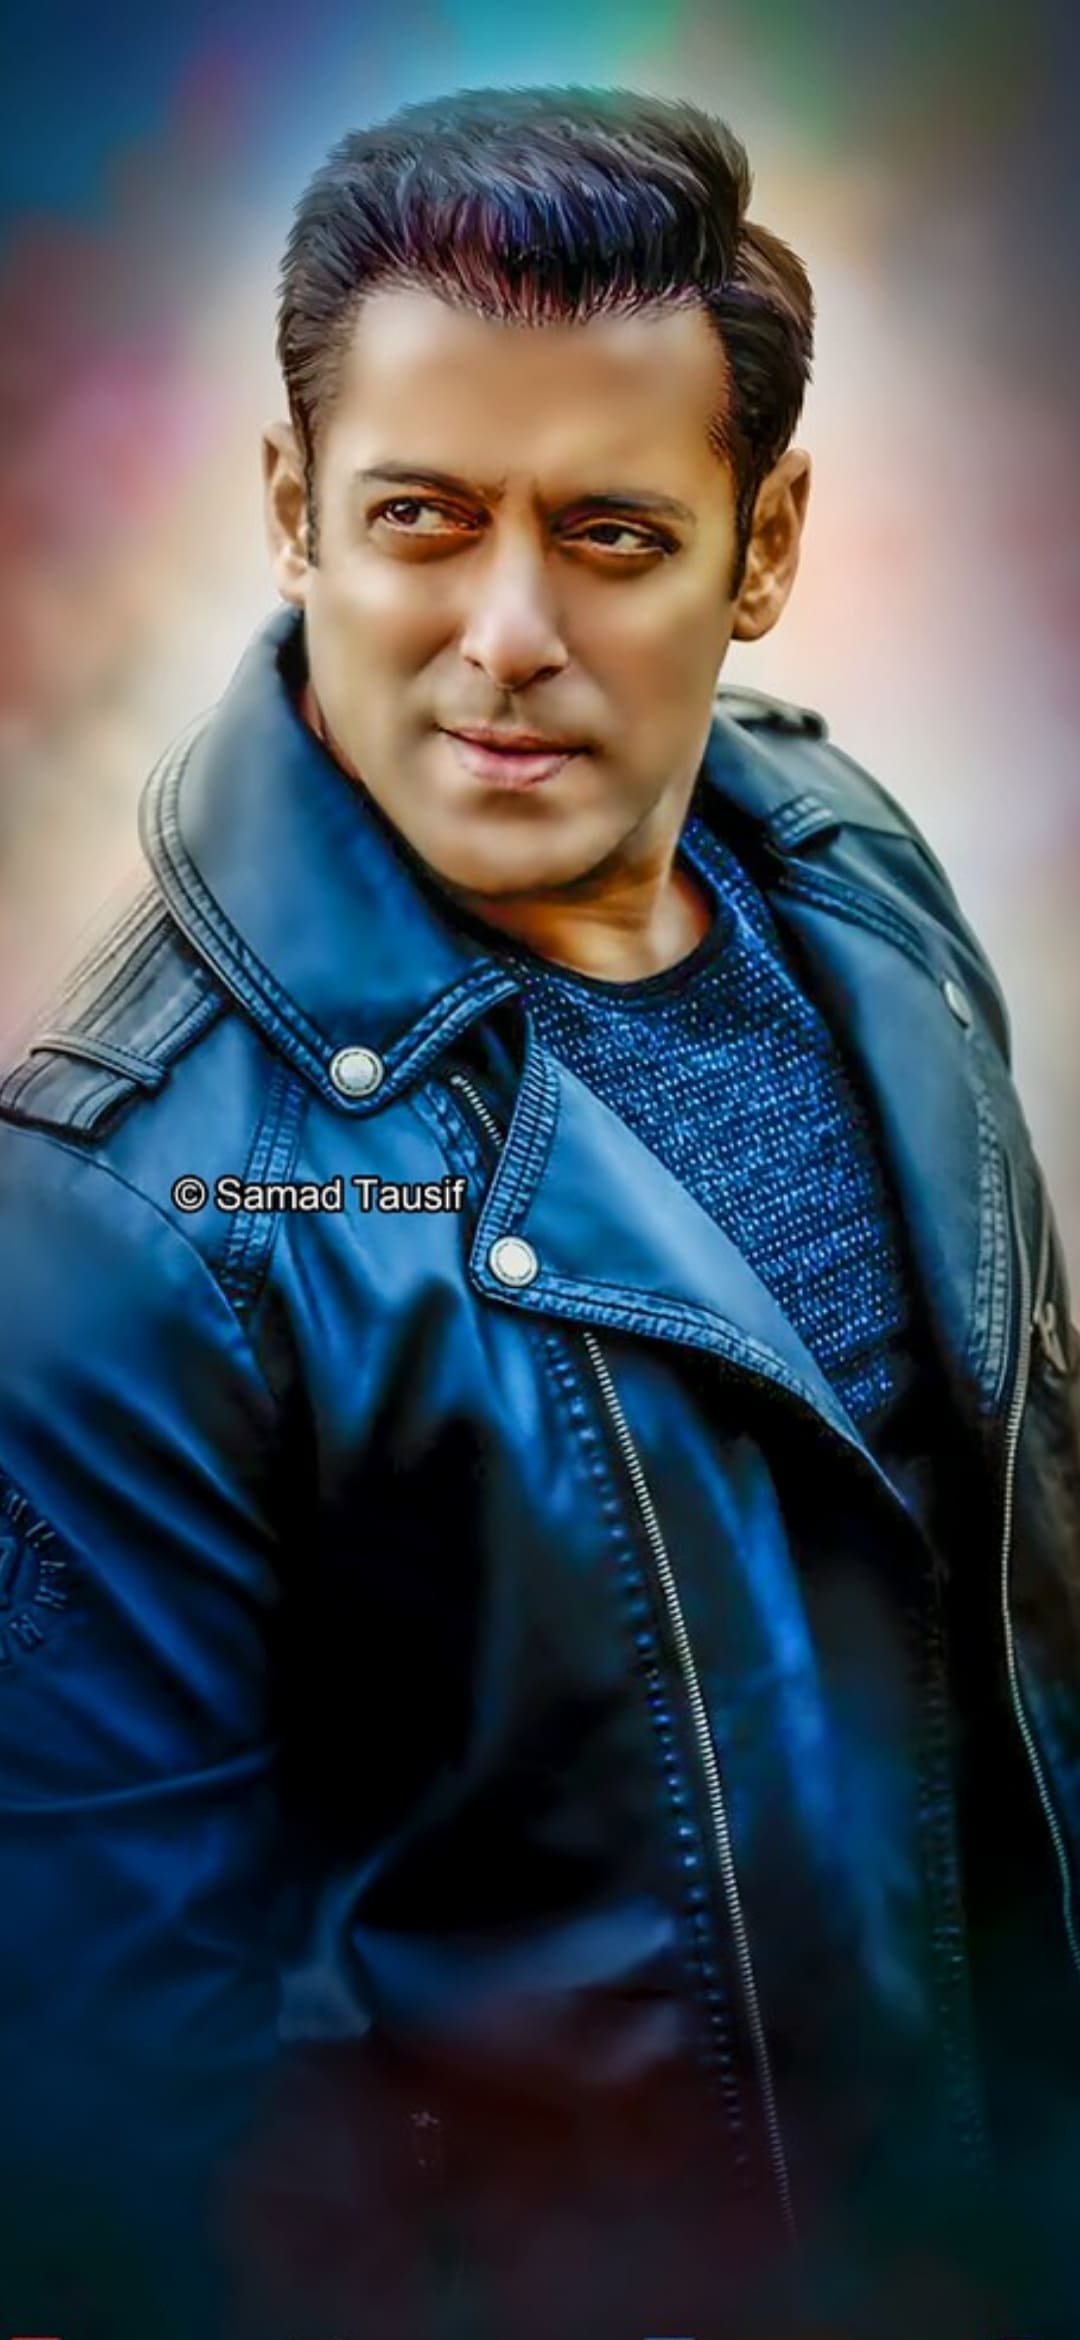 Salman Khan Background Images